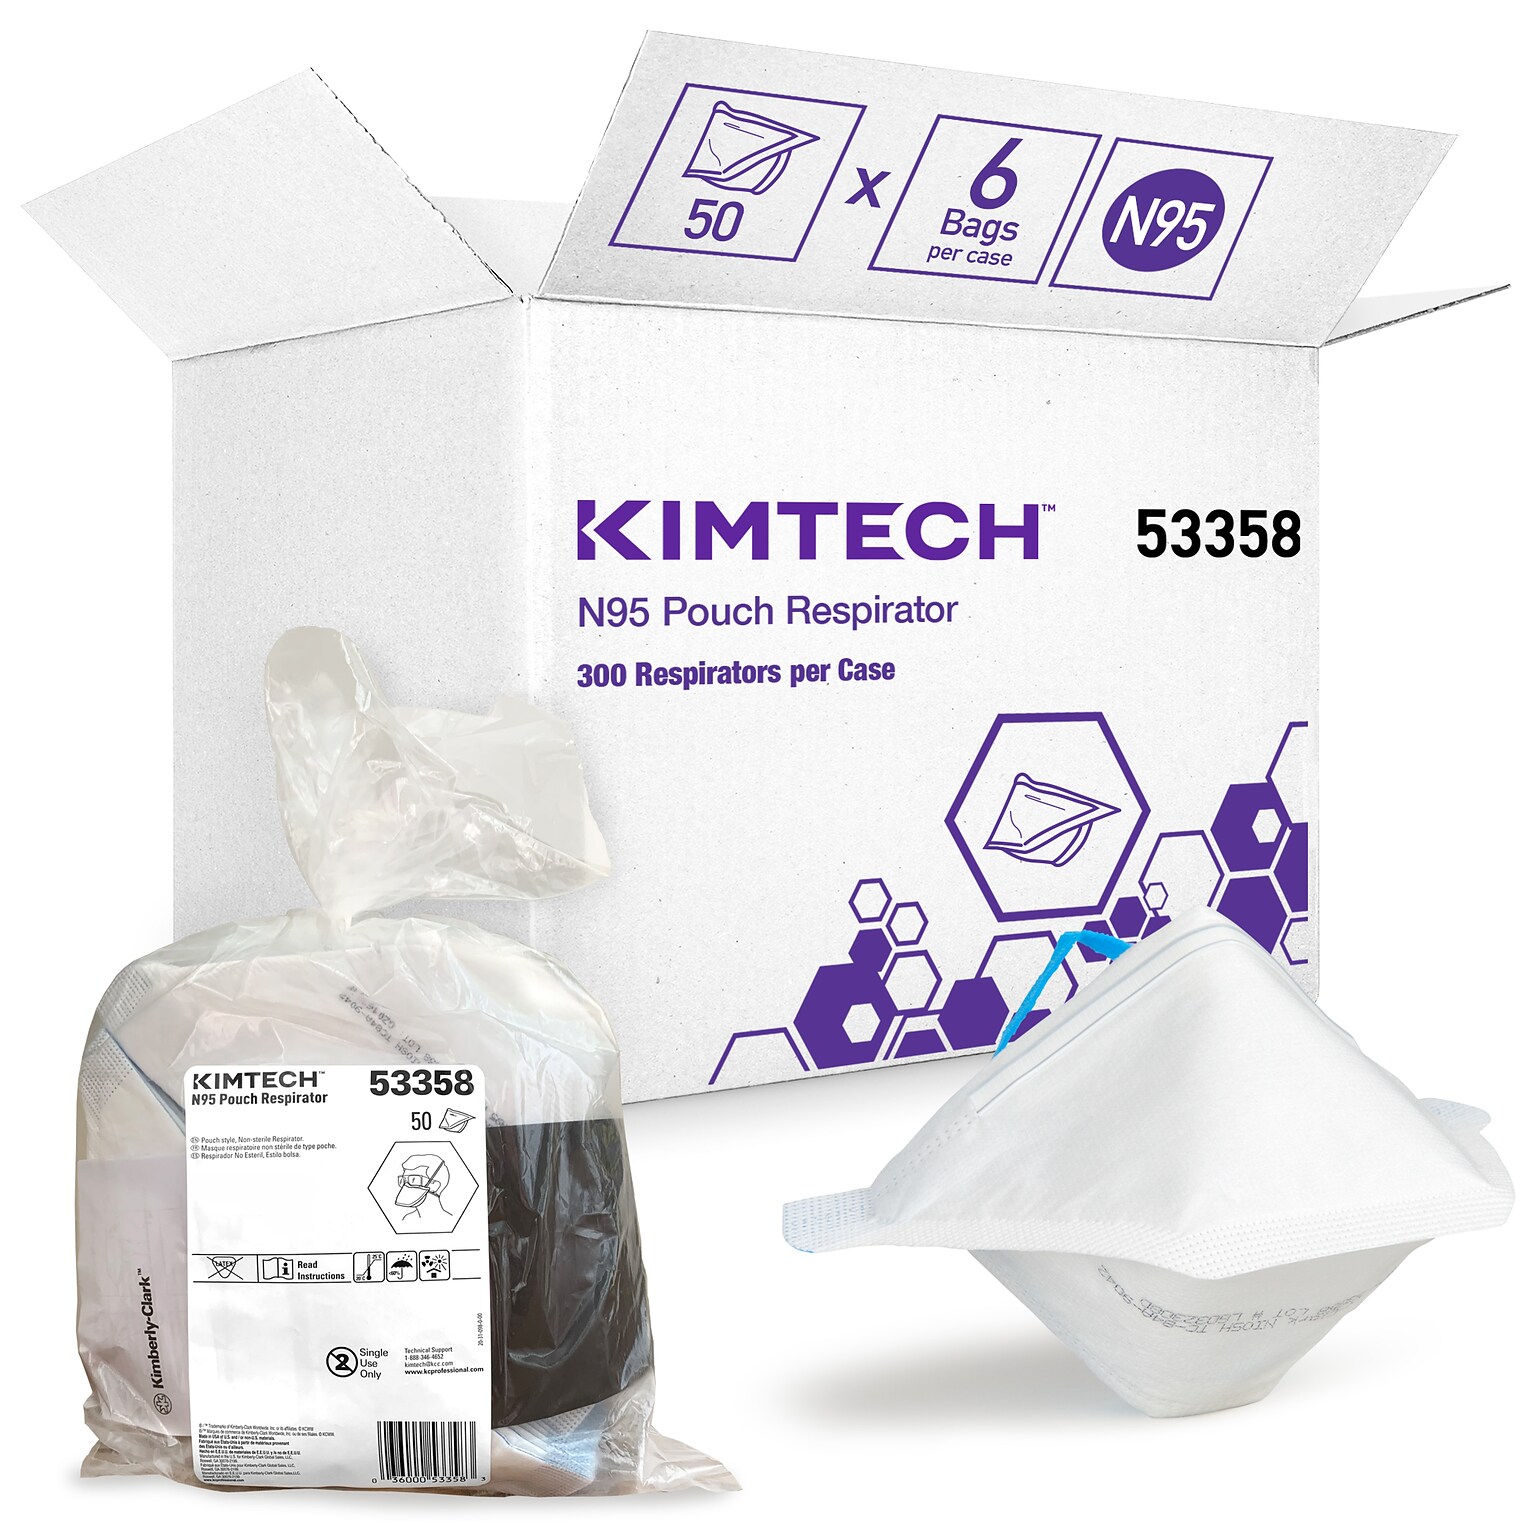 Kimtech Disposable N95 Pouch Respirator, Regular Size, White, 300/Carton (53358)